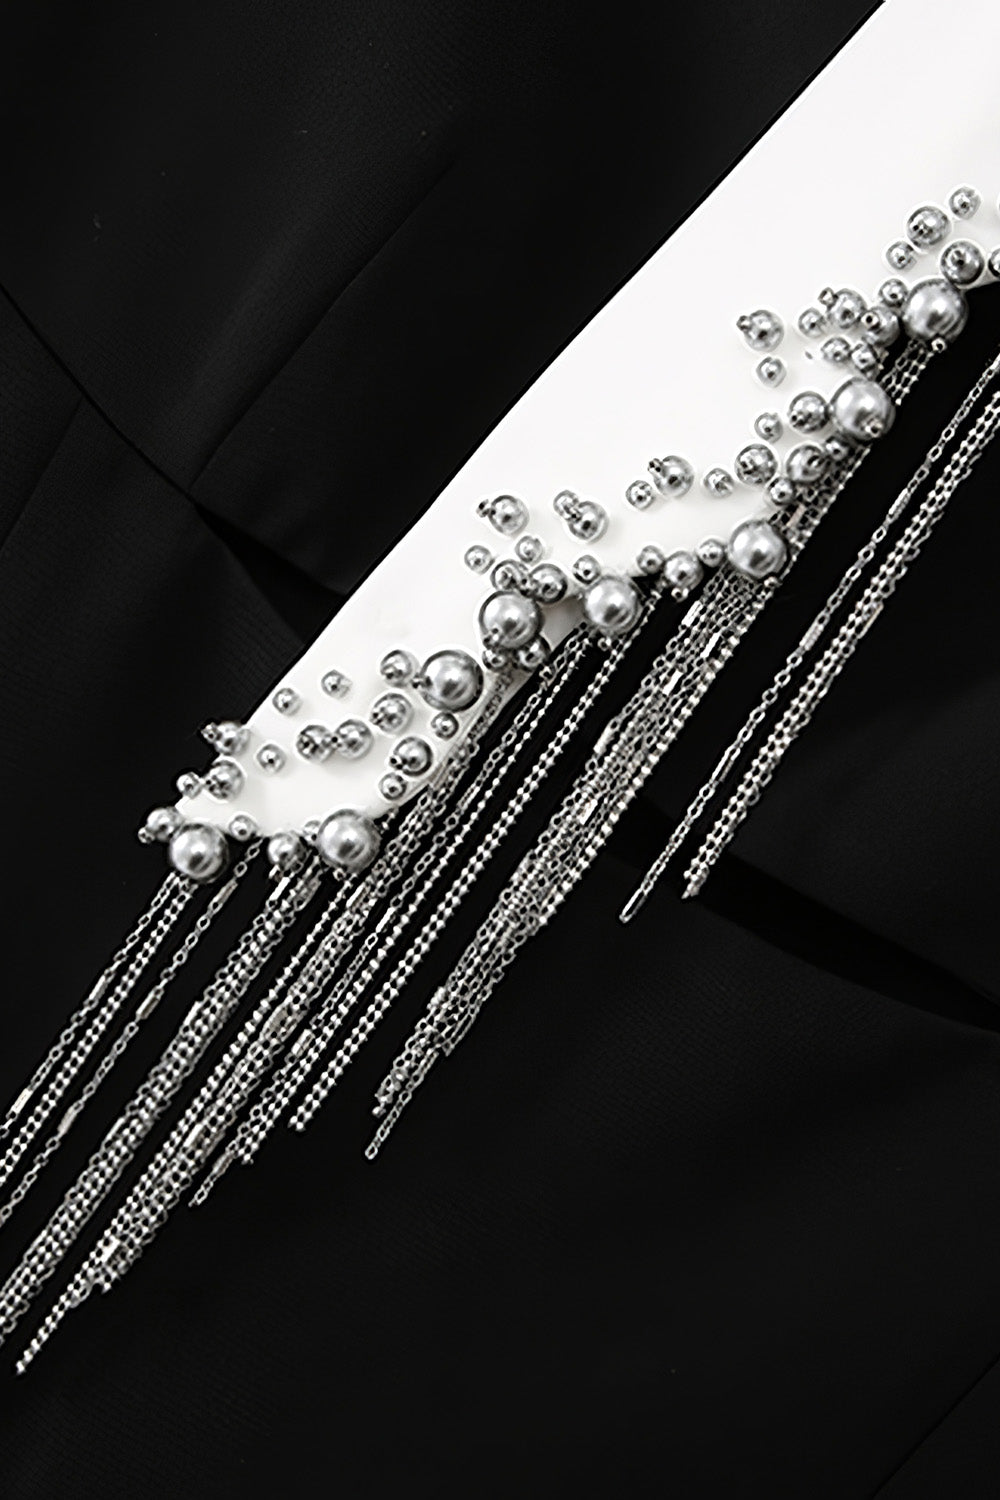 Midi Dress with Tie Detail - Black